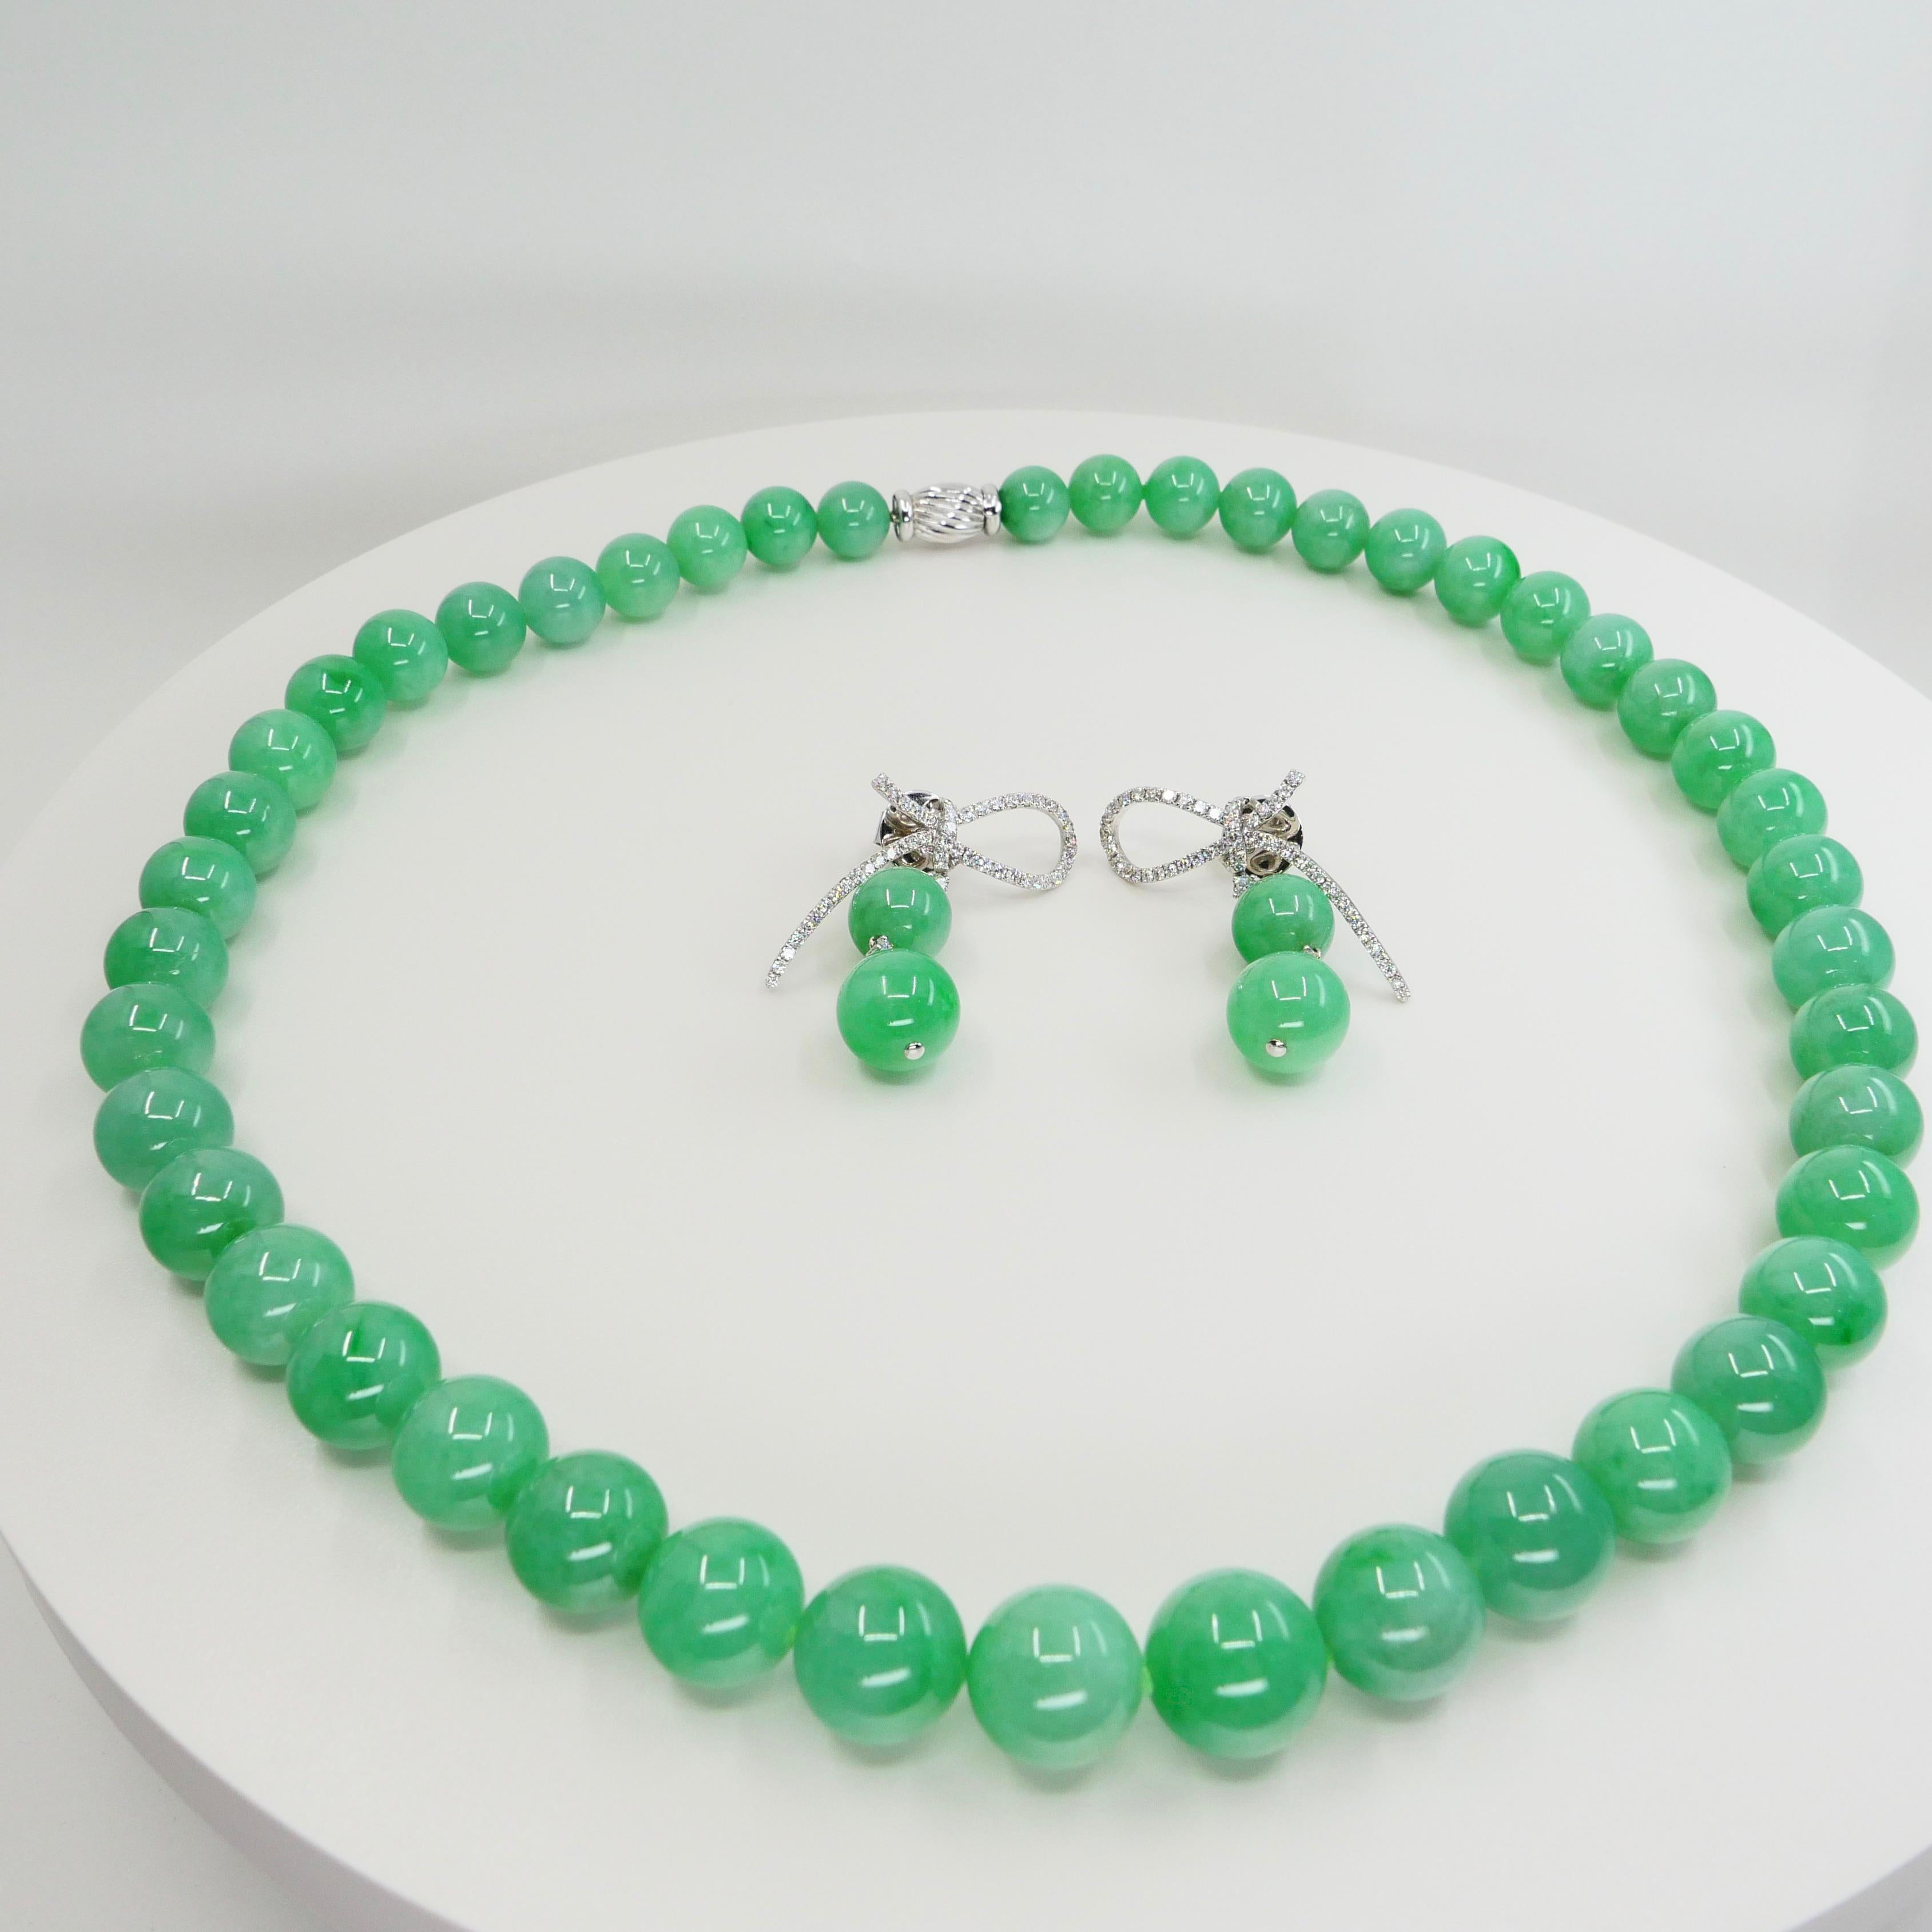 20 Green Jadeite Flat Pear Beads ap 6x9mm #68041 